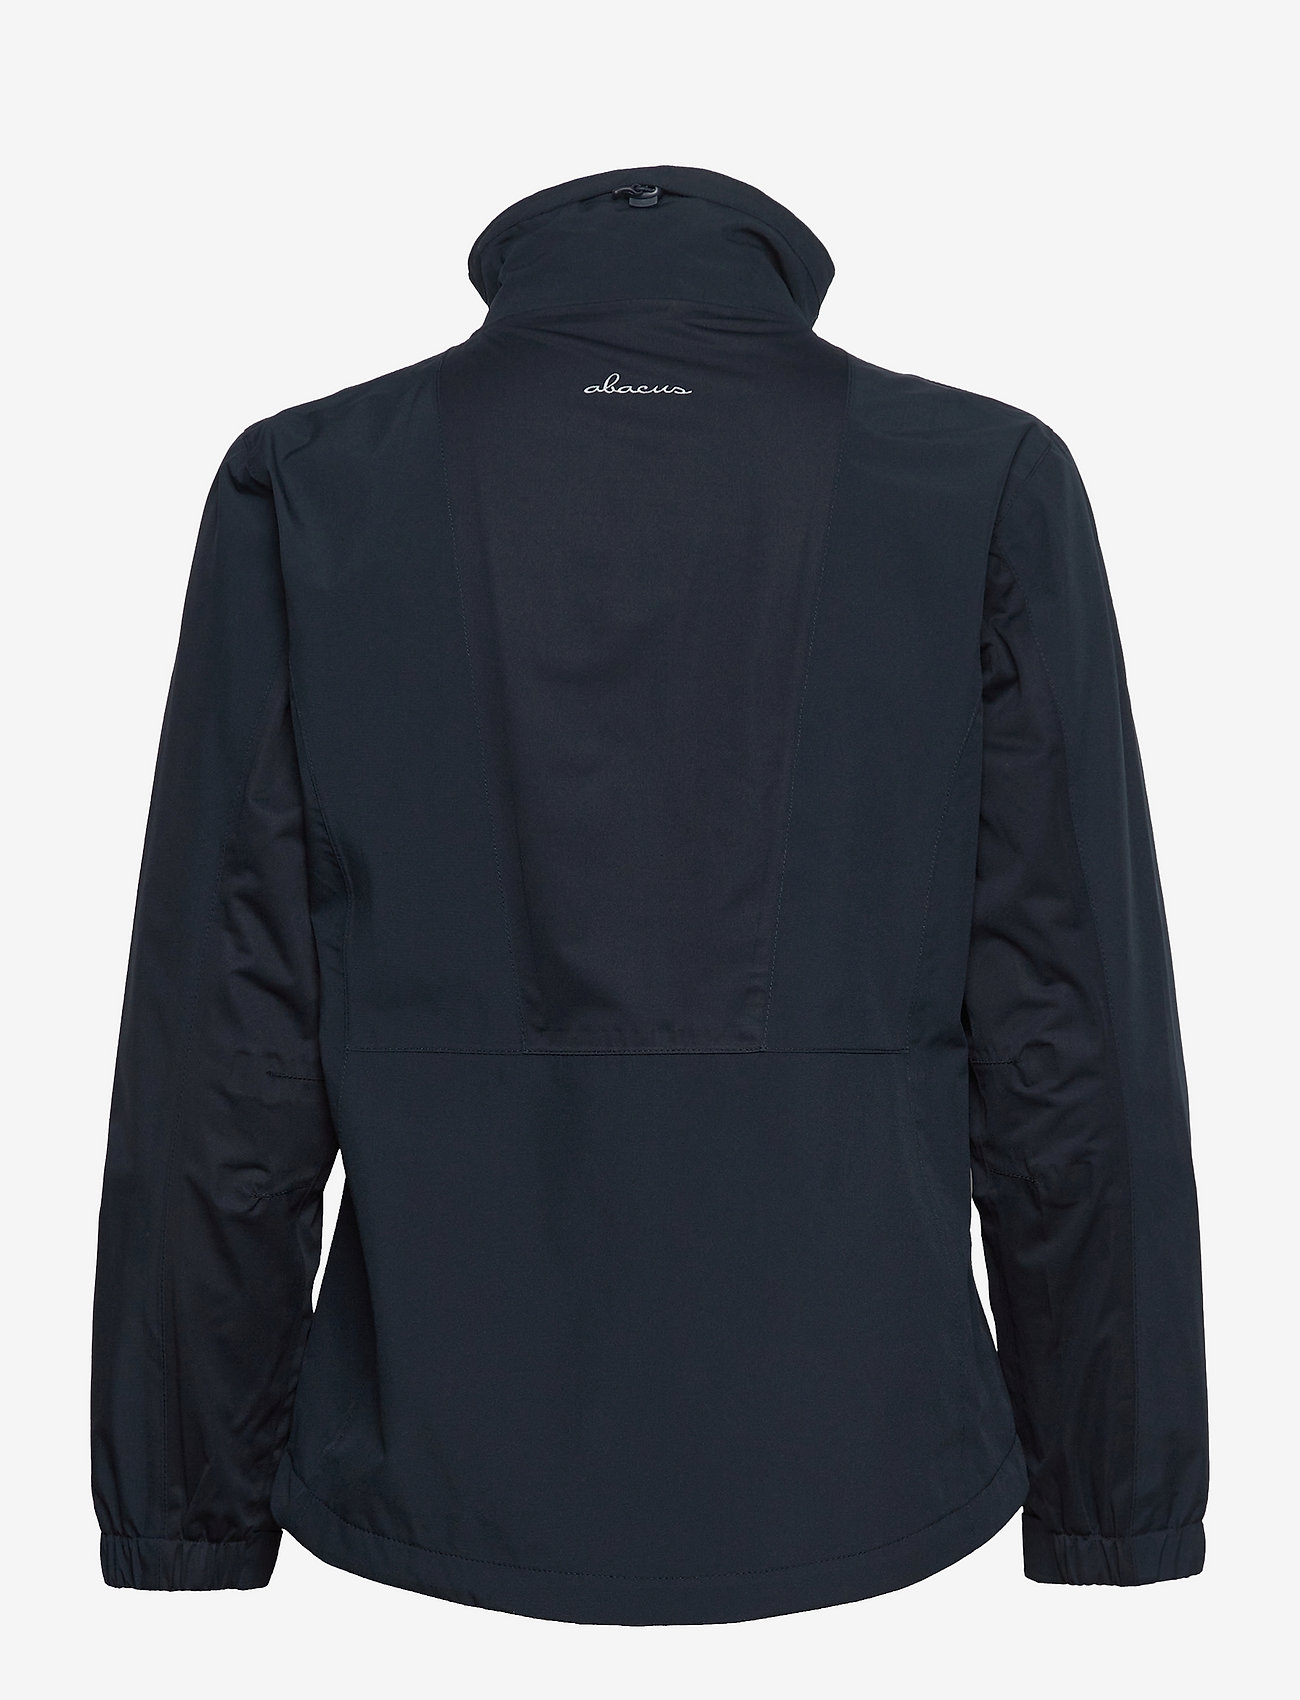 Abacus - Lds Pines rain jacket - golf jackets - navy - 1